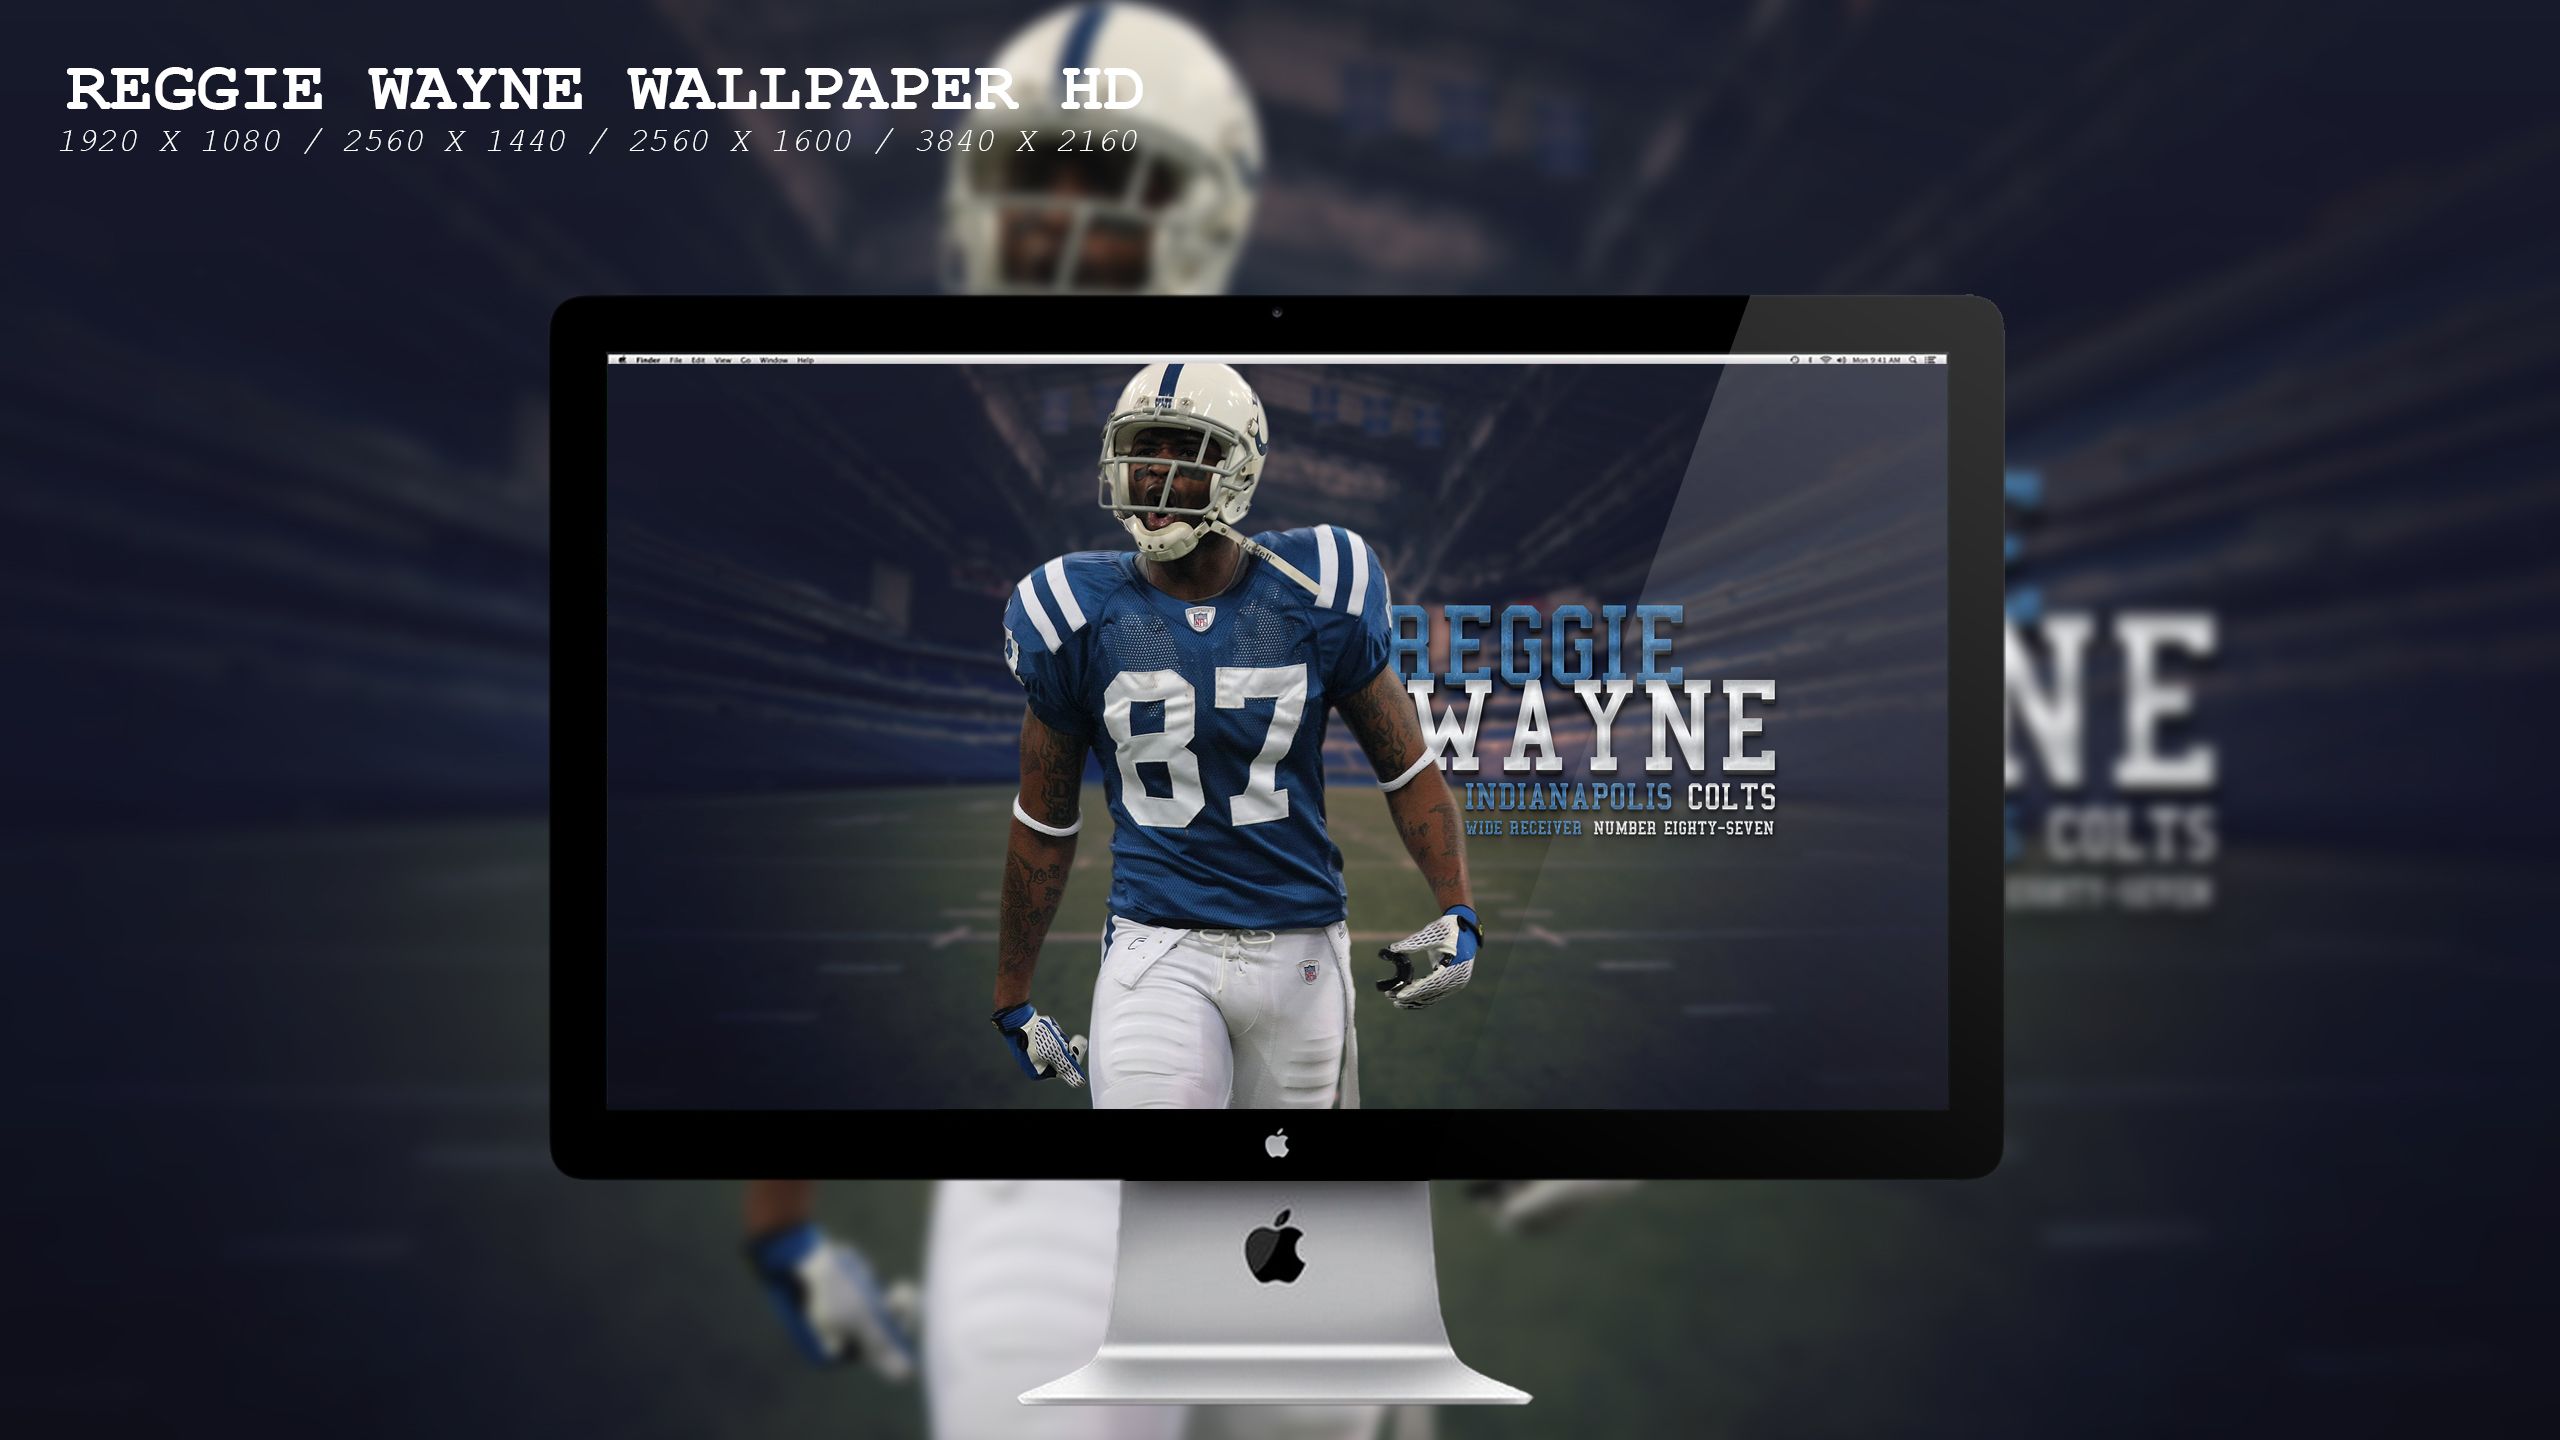 Reggie Wayne Wallpaper HD by BeAware8 on DeviantArt